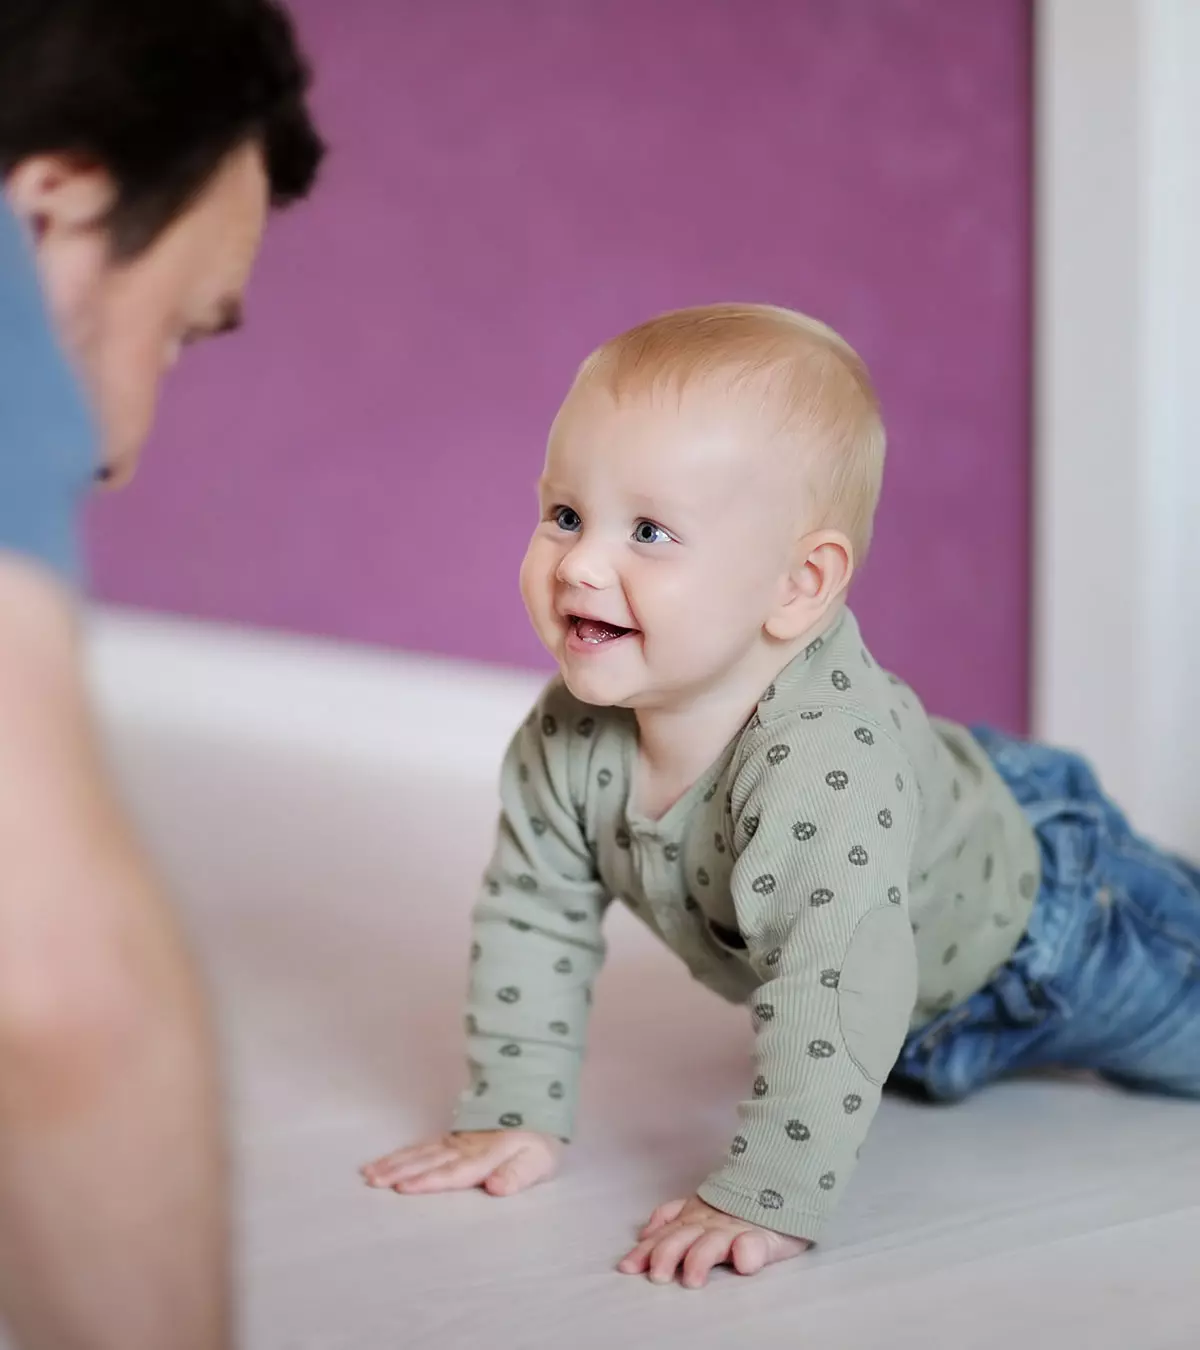 Why Do Some Babies Crawl Backwards